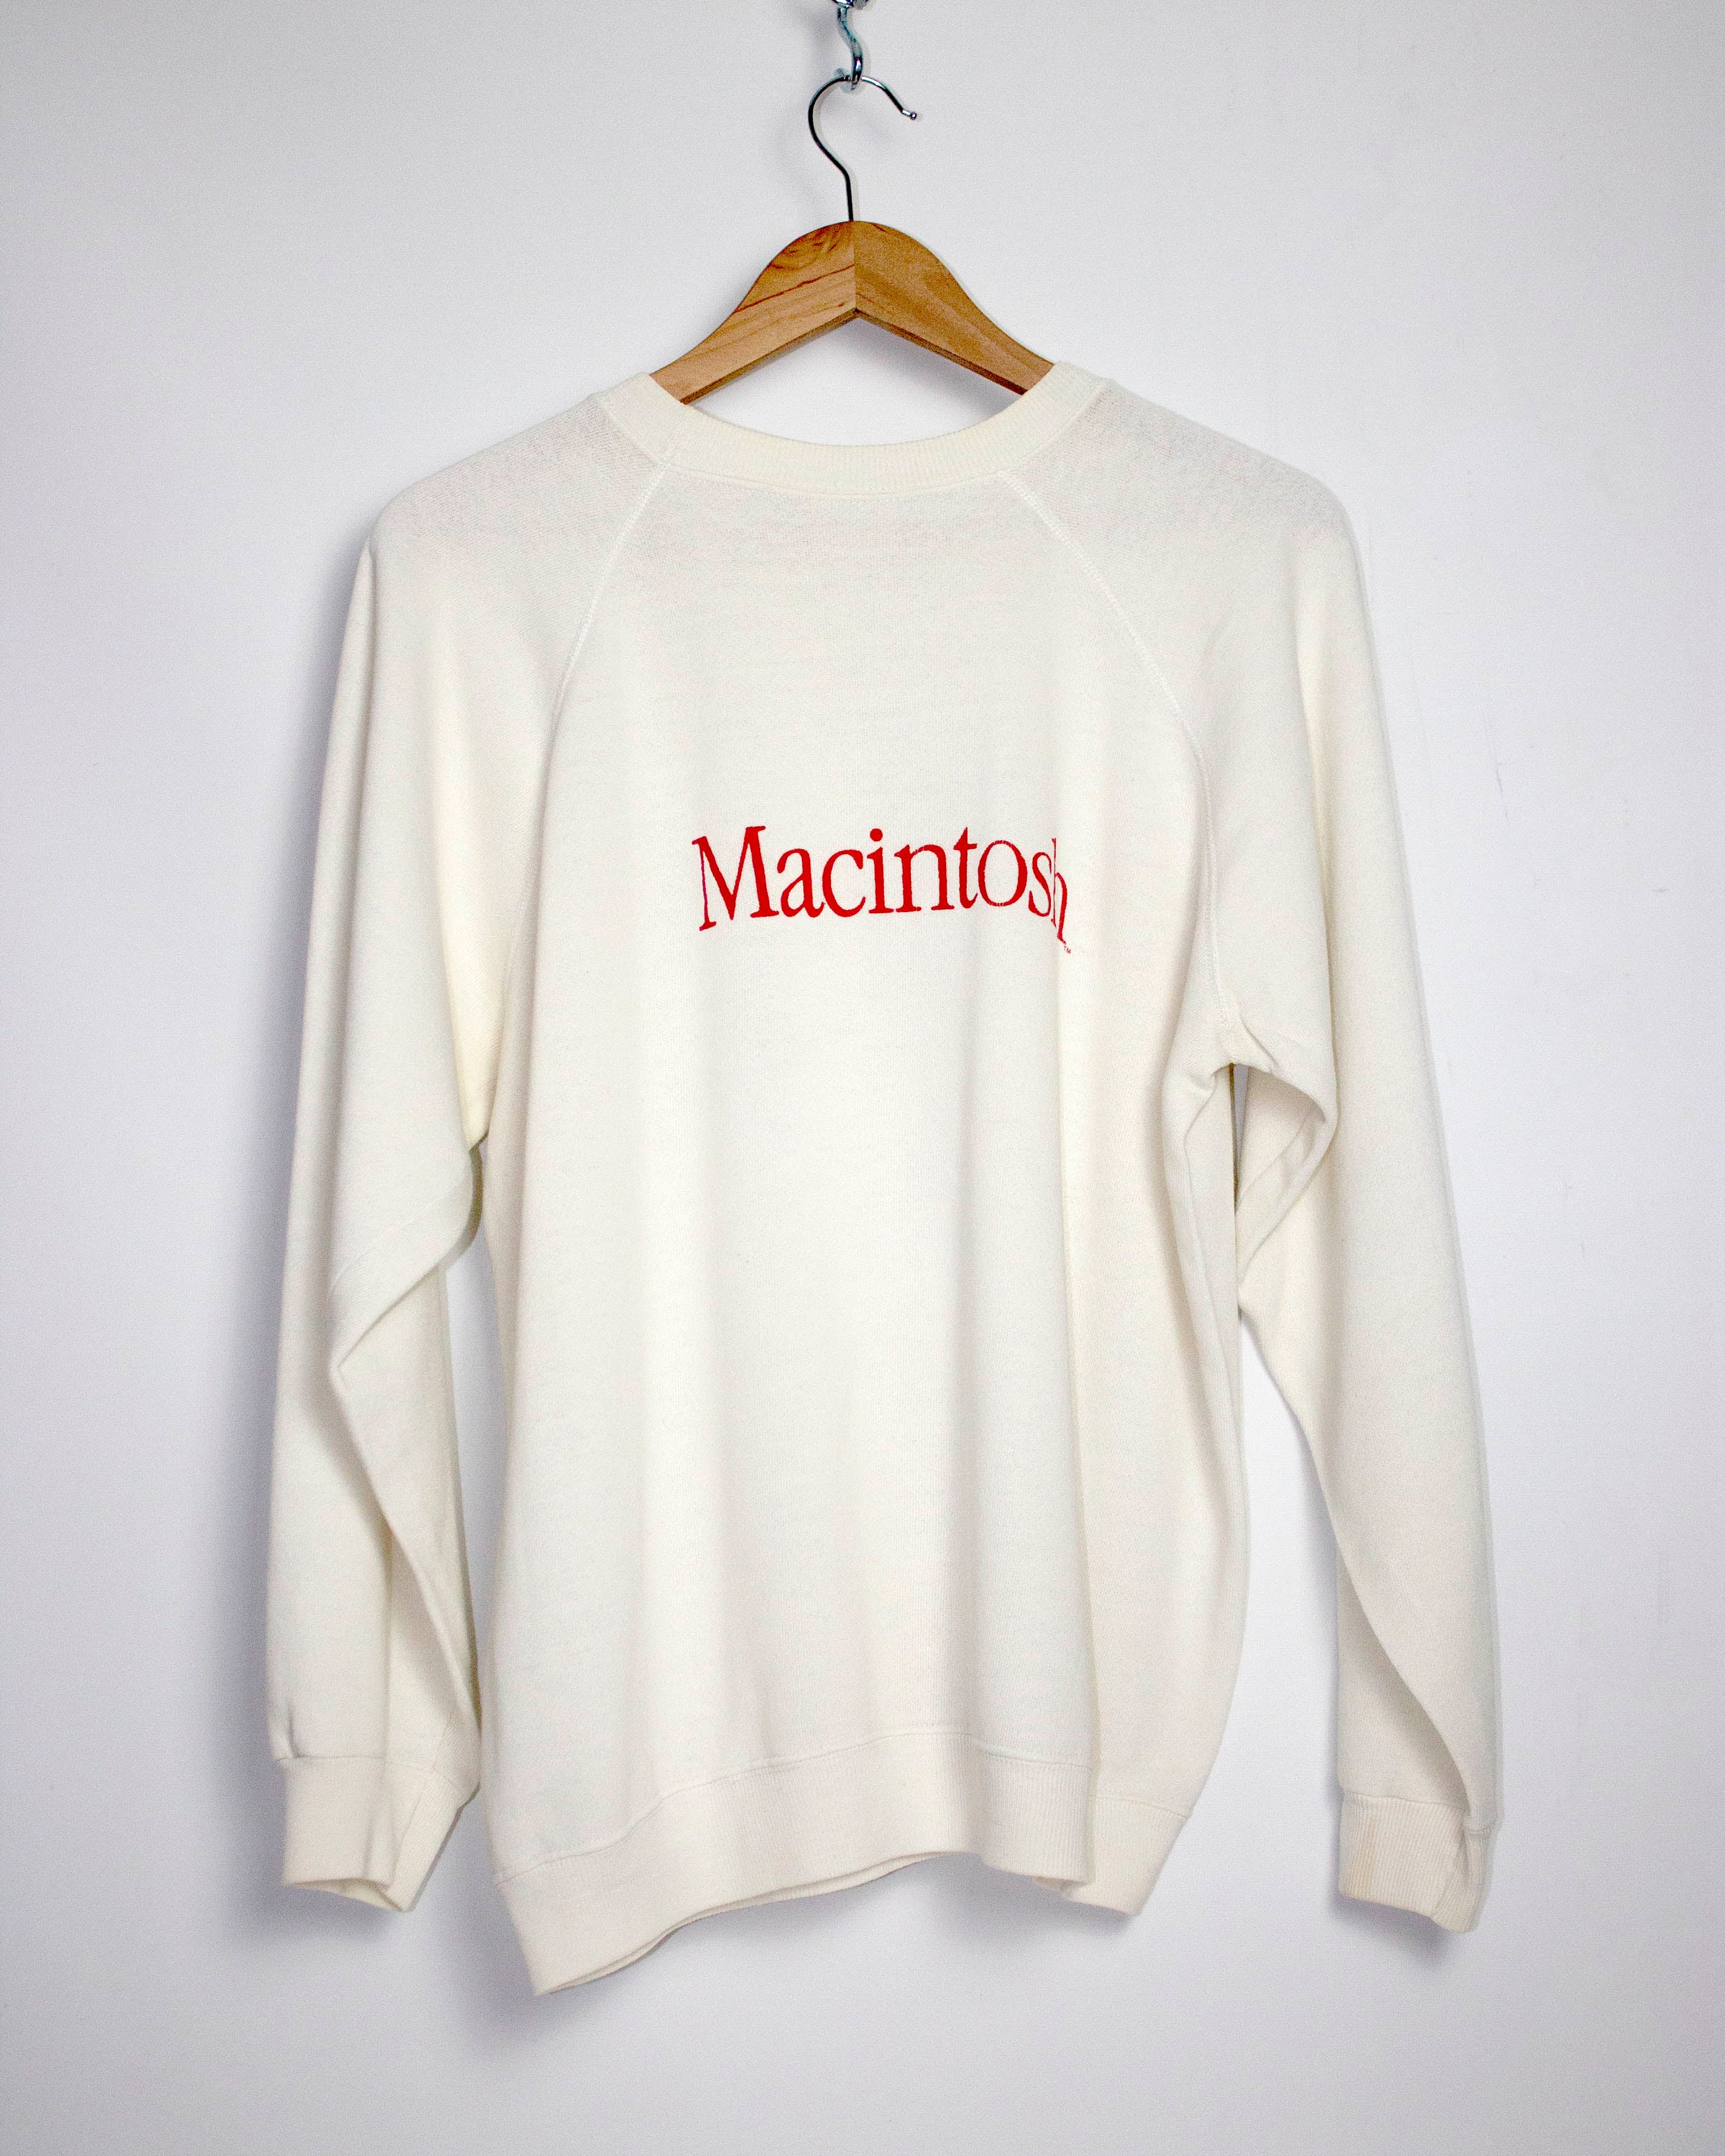 Vintage Picasso Apple Macintosh Crewneck Sweatshirt Sz L